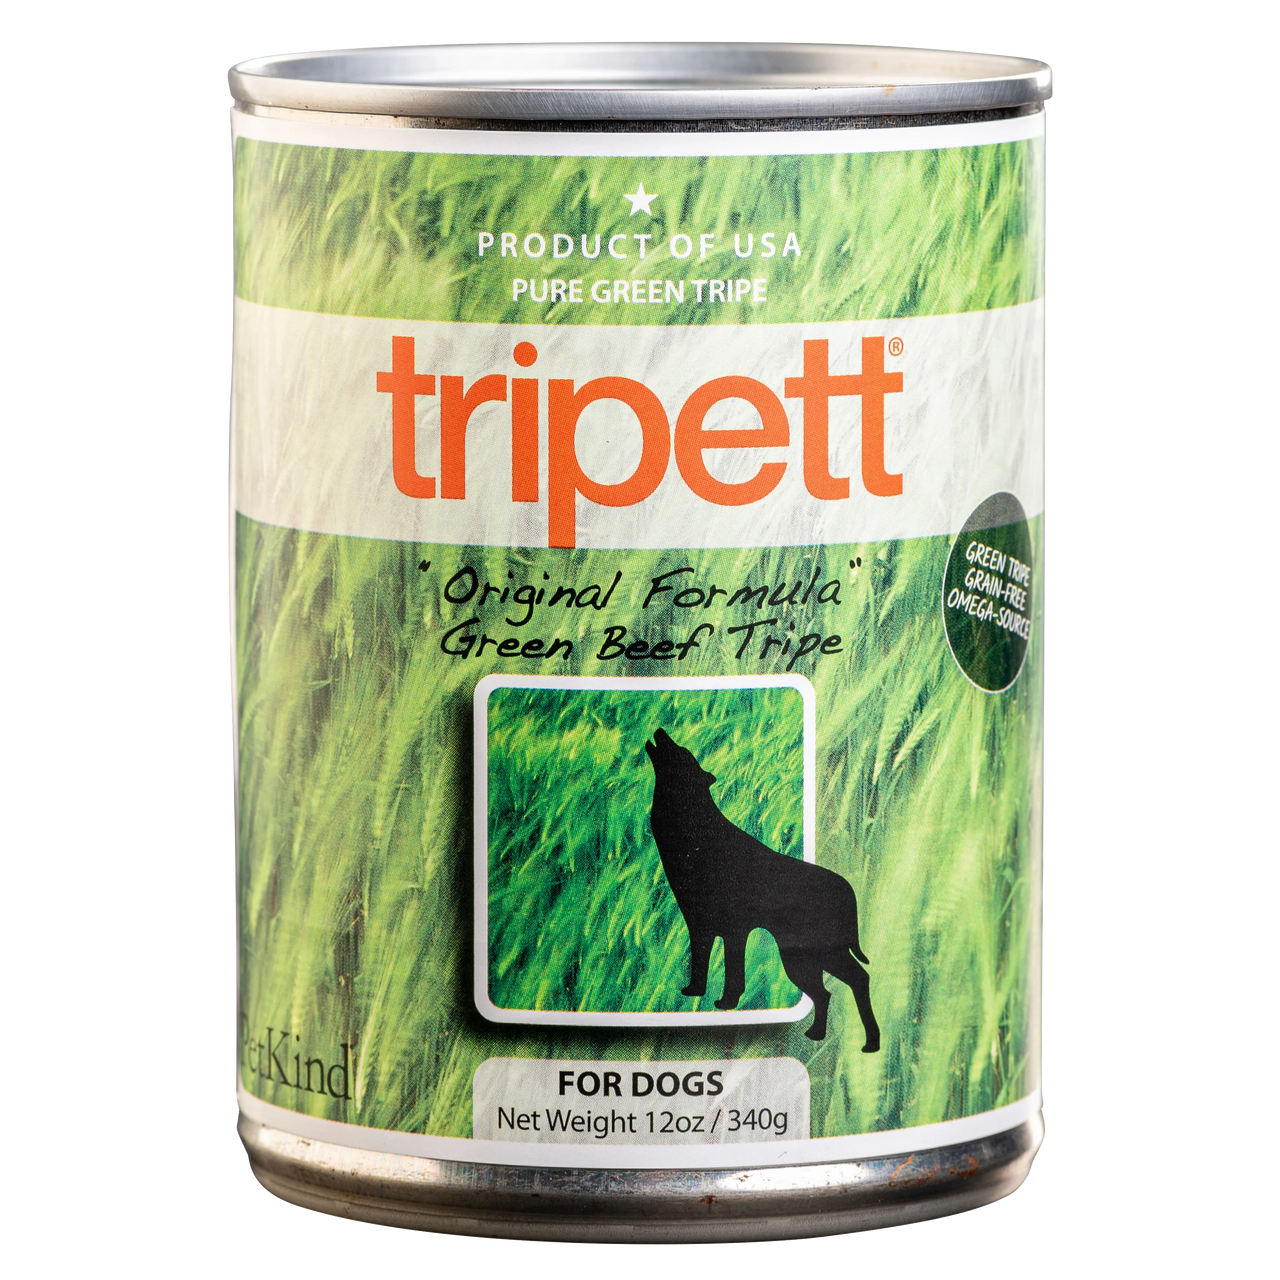 Tripett Green Beef Tripe